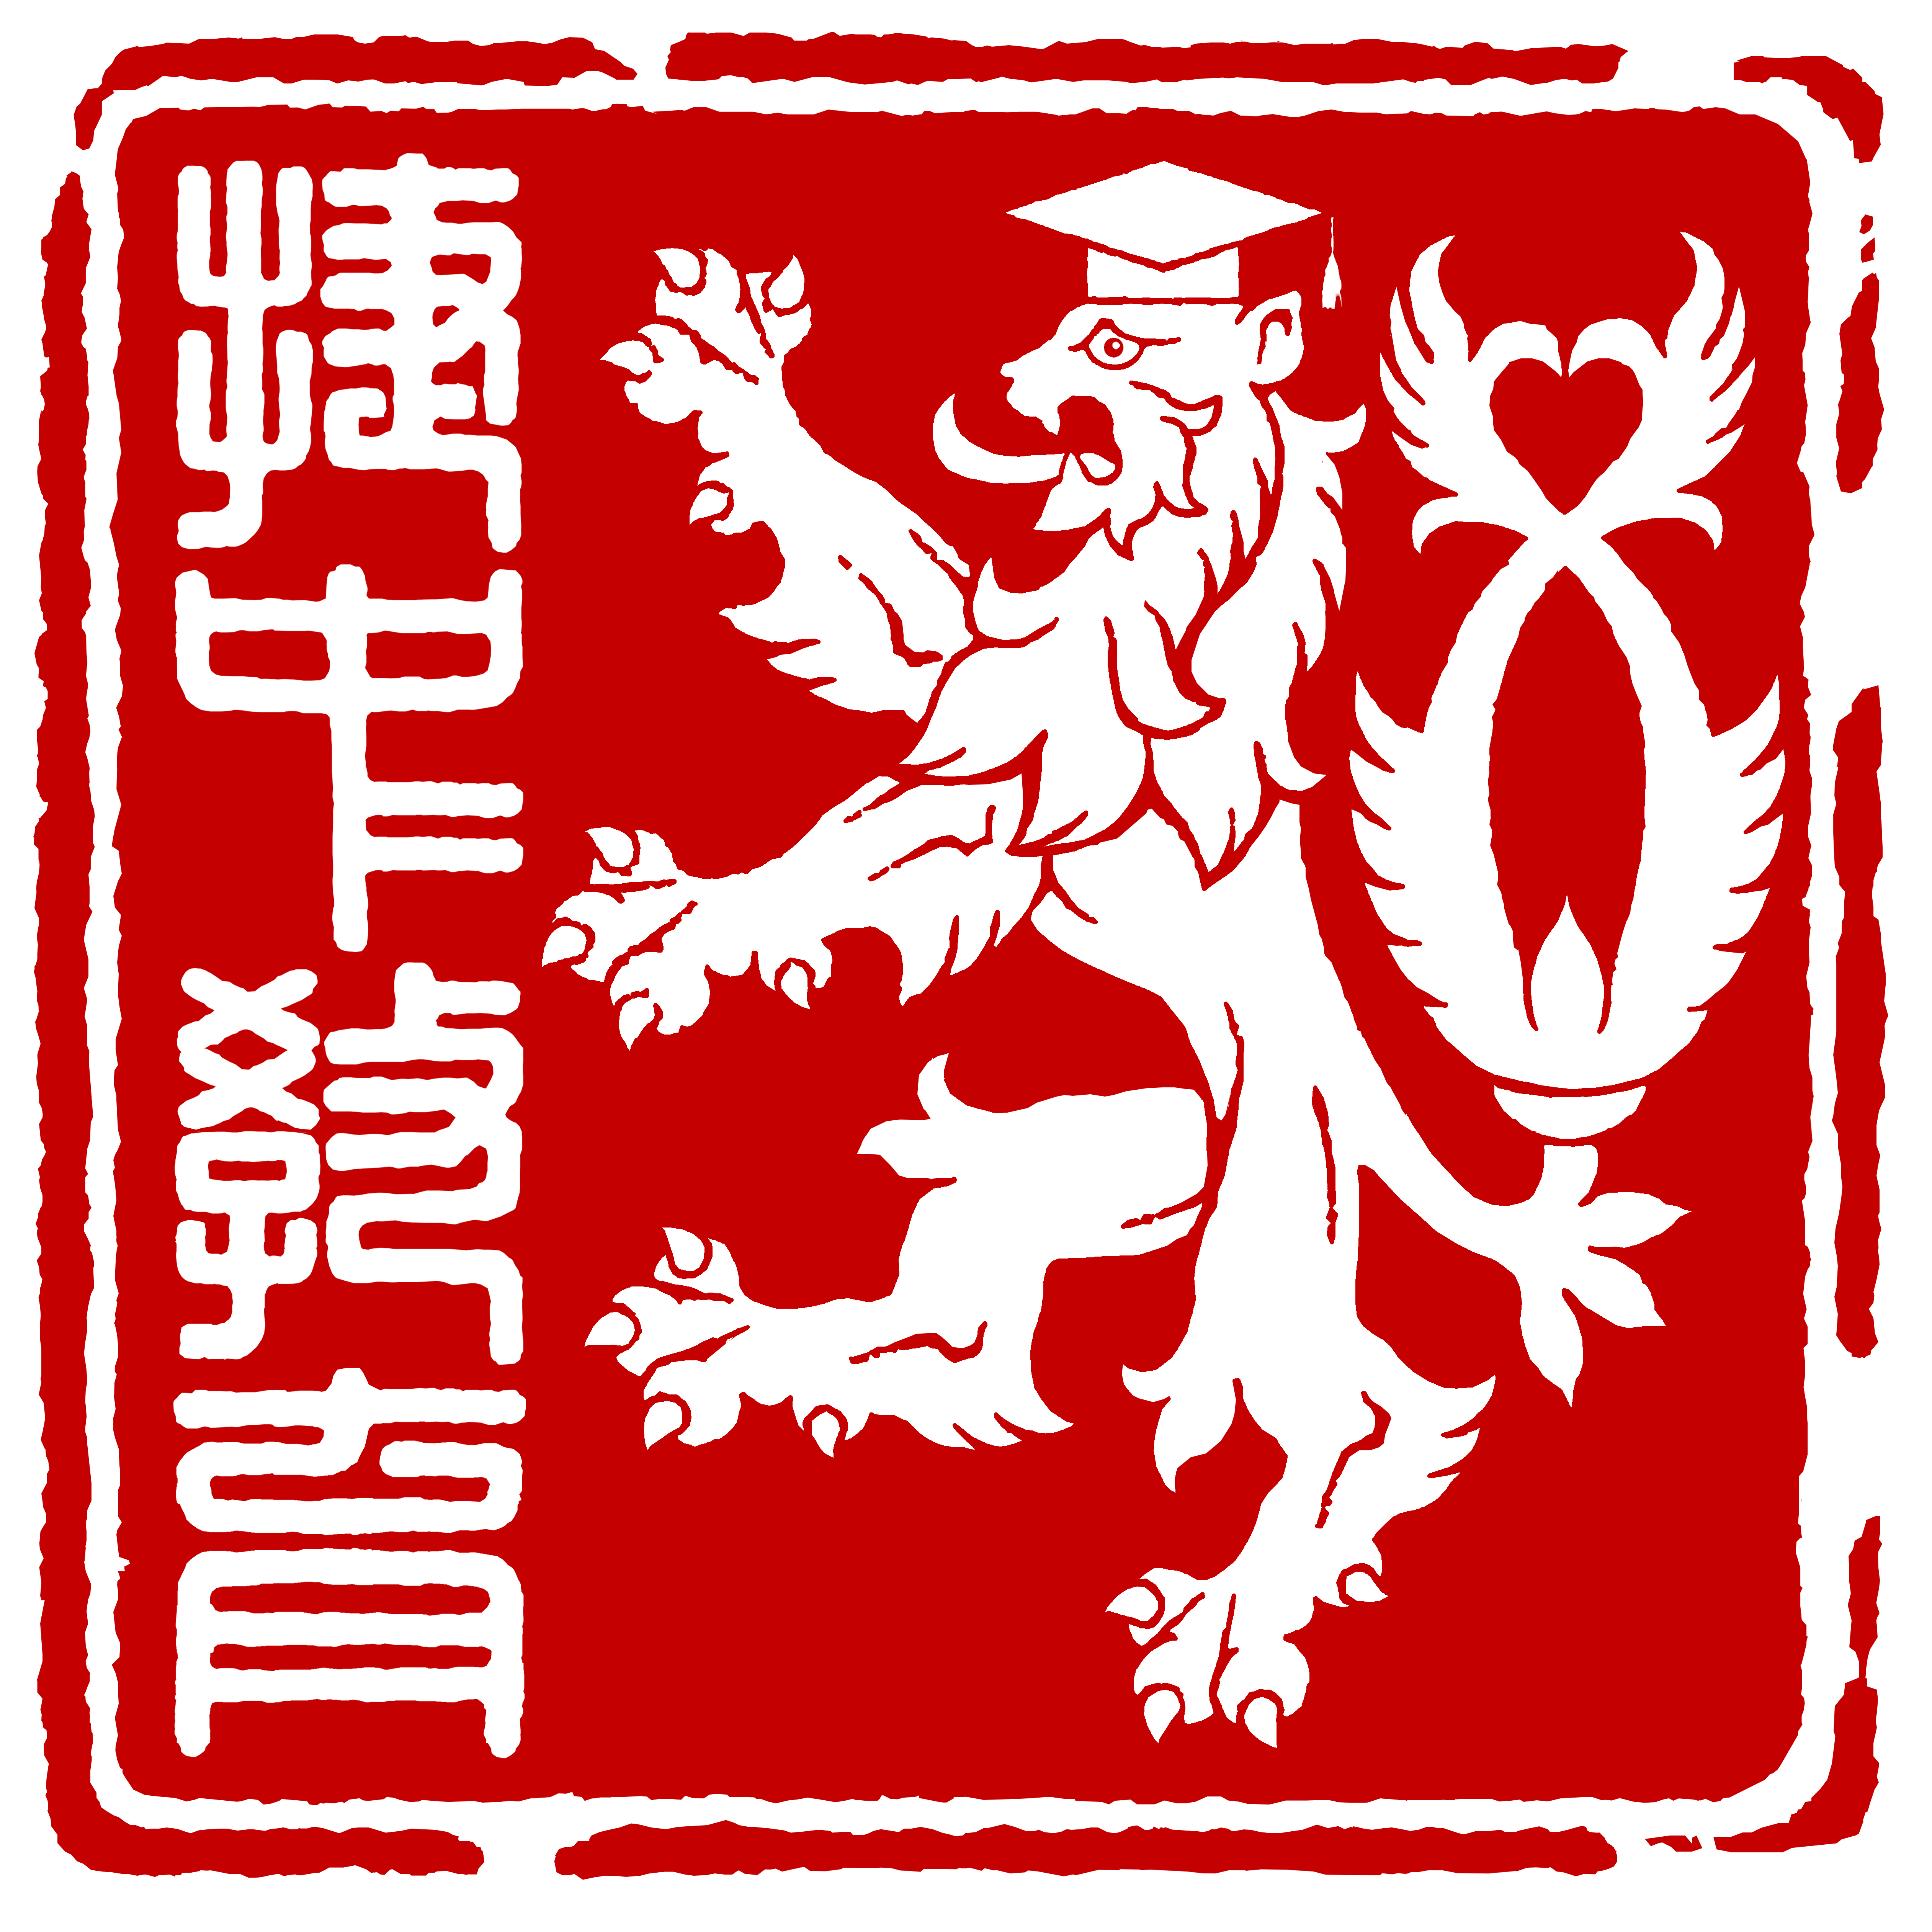 Czech China Educational Exchange Association